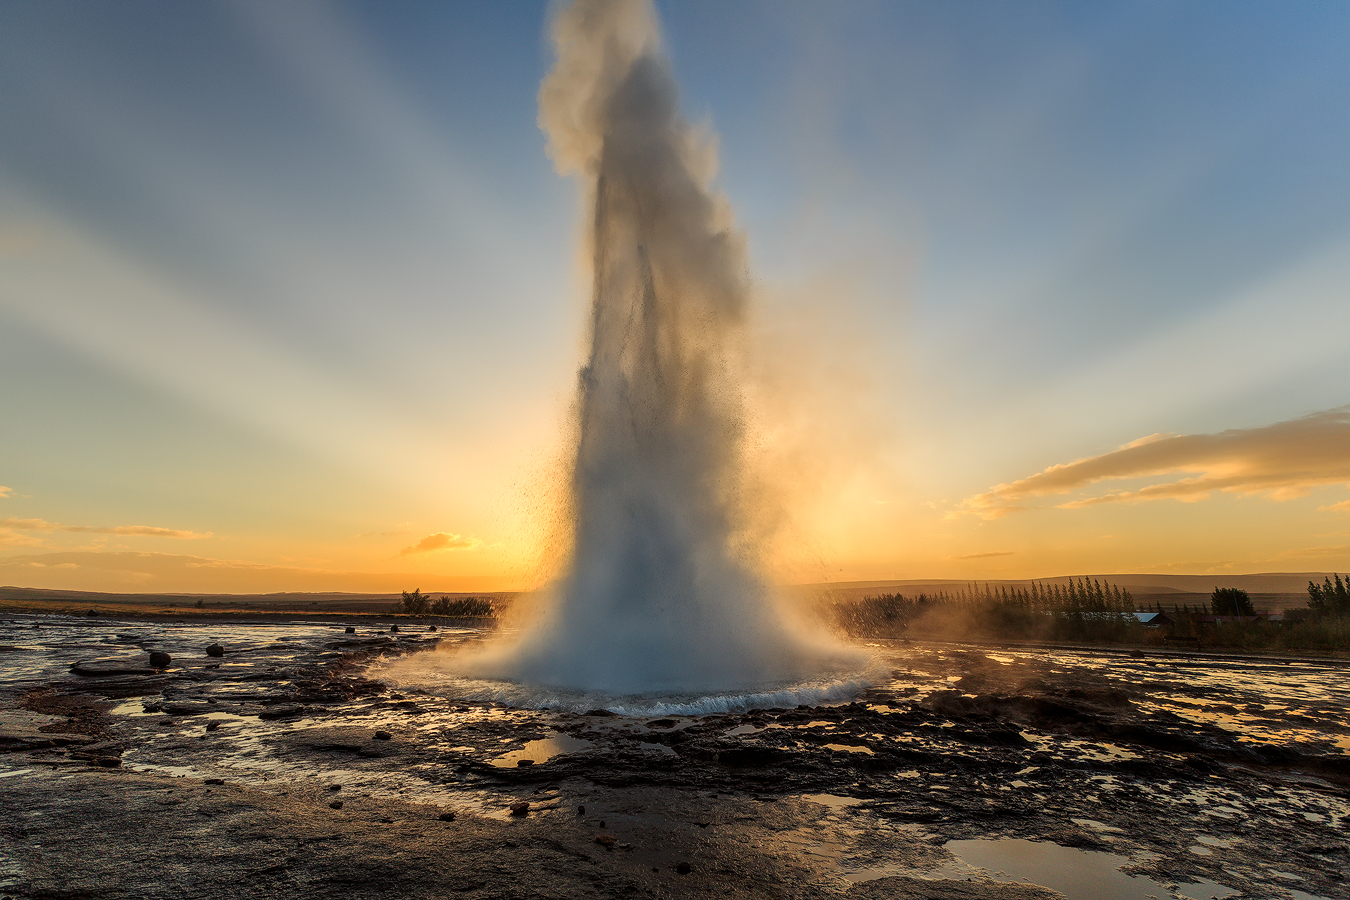 The stunning geyser Strokkur goes off in the winter landscape.